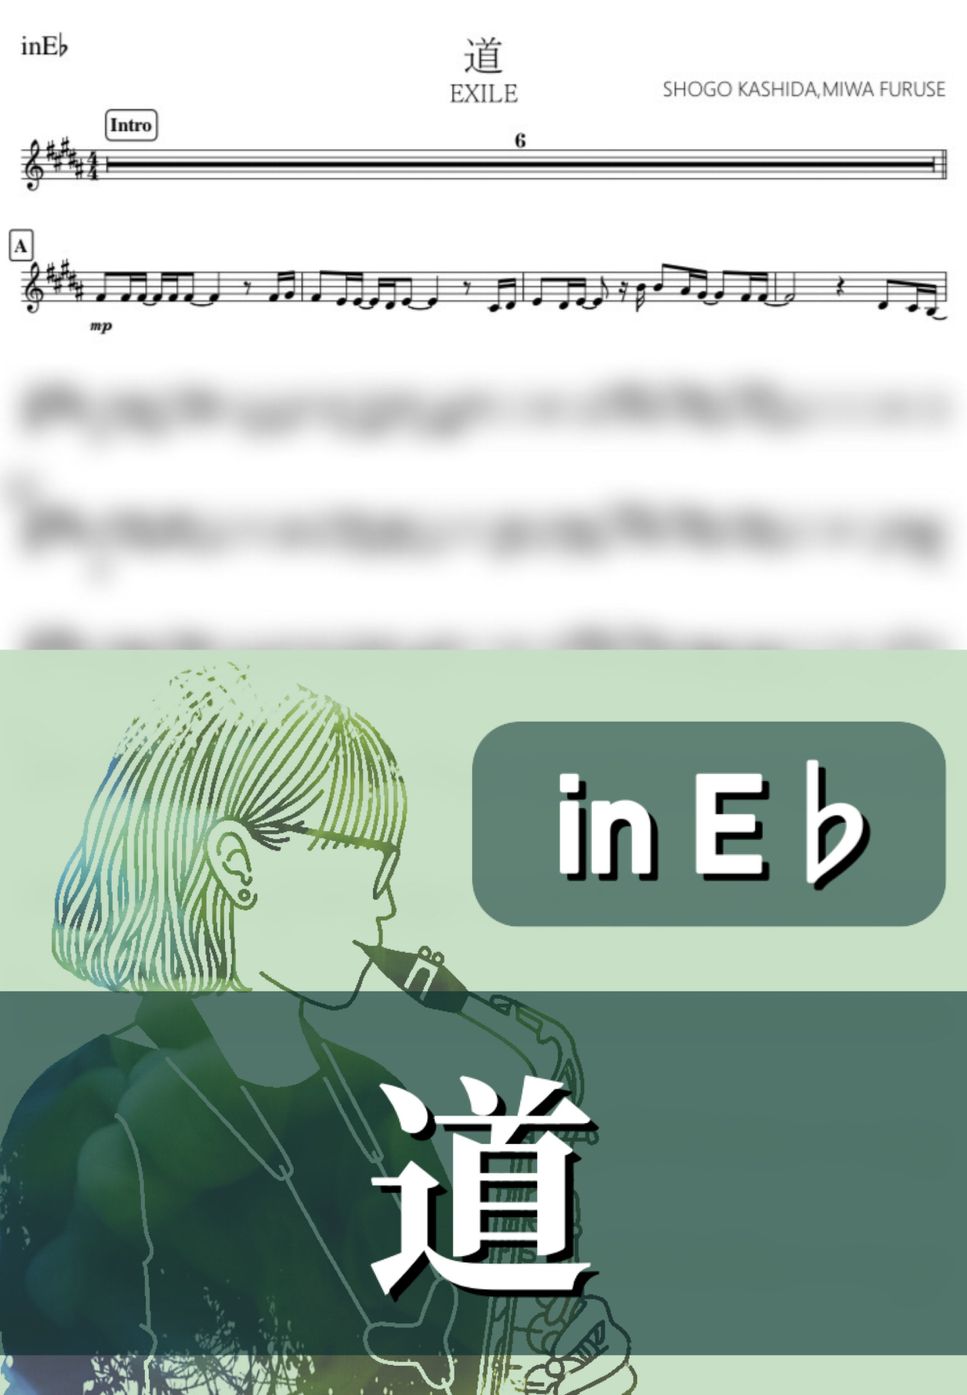 EXILE - 道 (E♭) by kanamusic